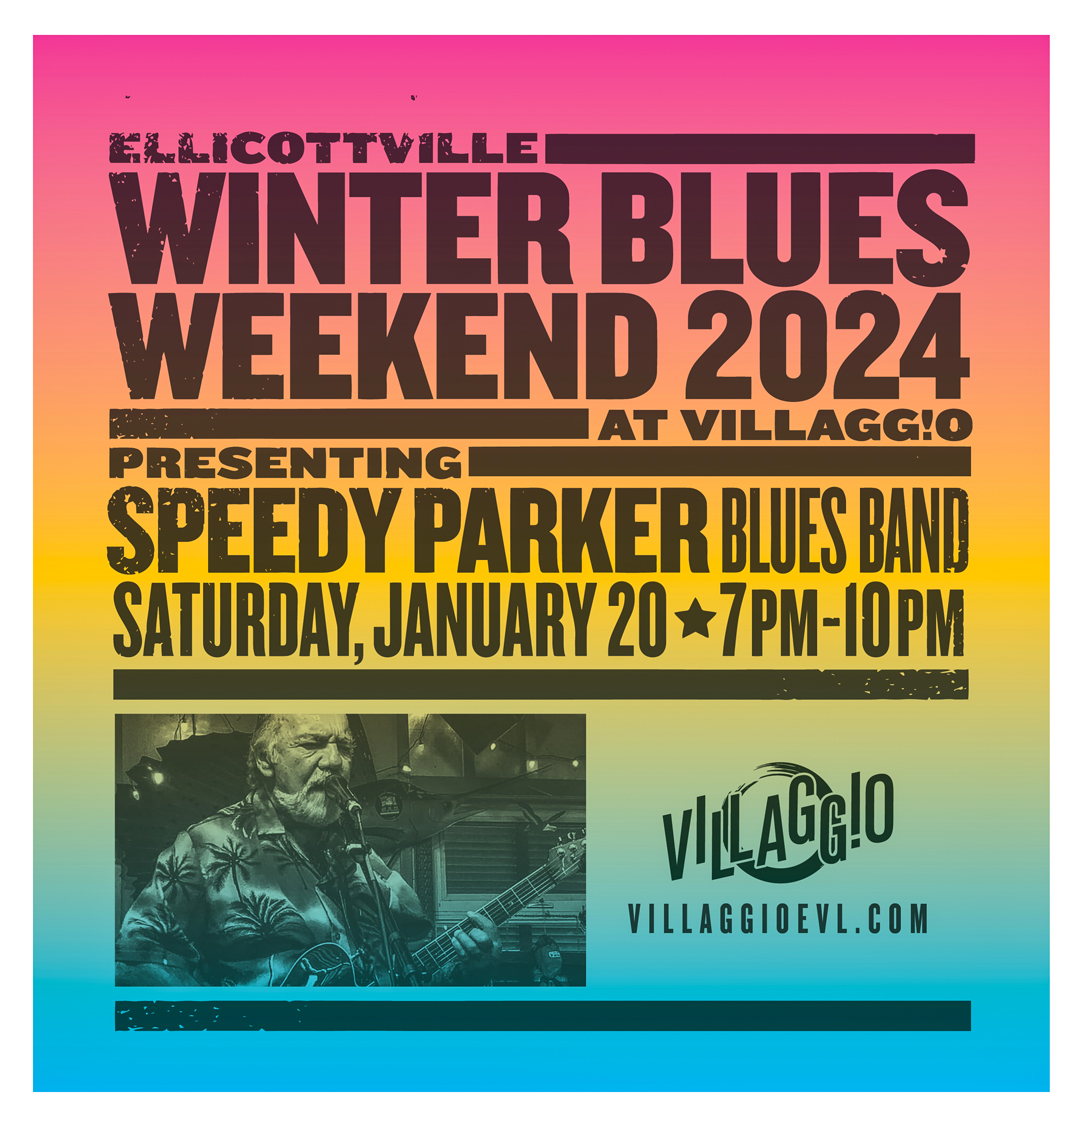 Ellicottville Winter Blues Weekend at Villaggio | Presenting Speedy Parker Blues Band